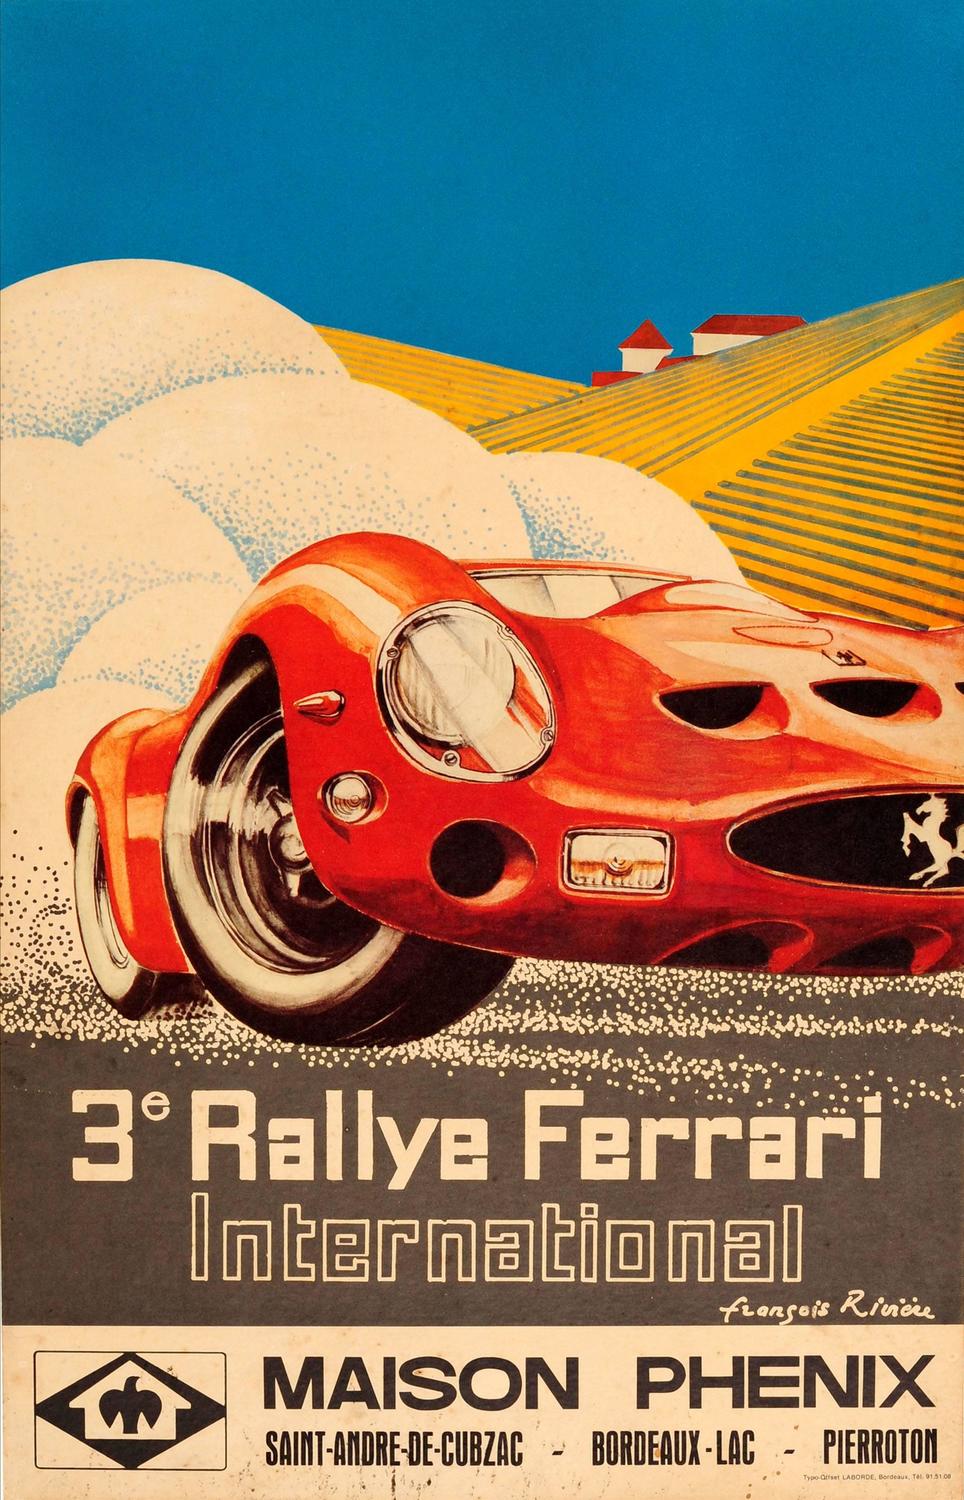 François Rivière - Original Vintage Car Racing Event Poster For The 3rd